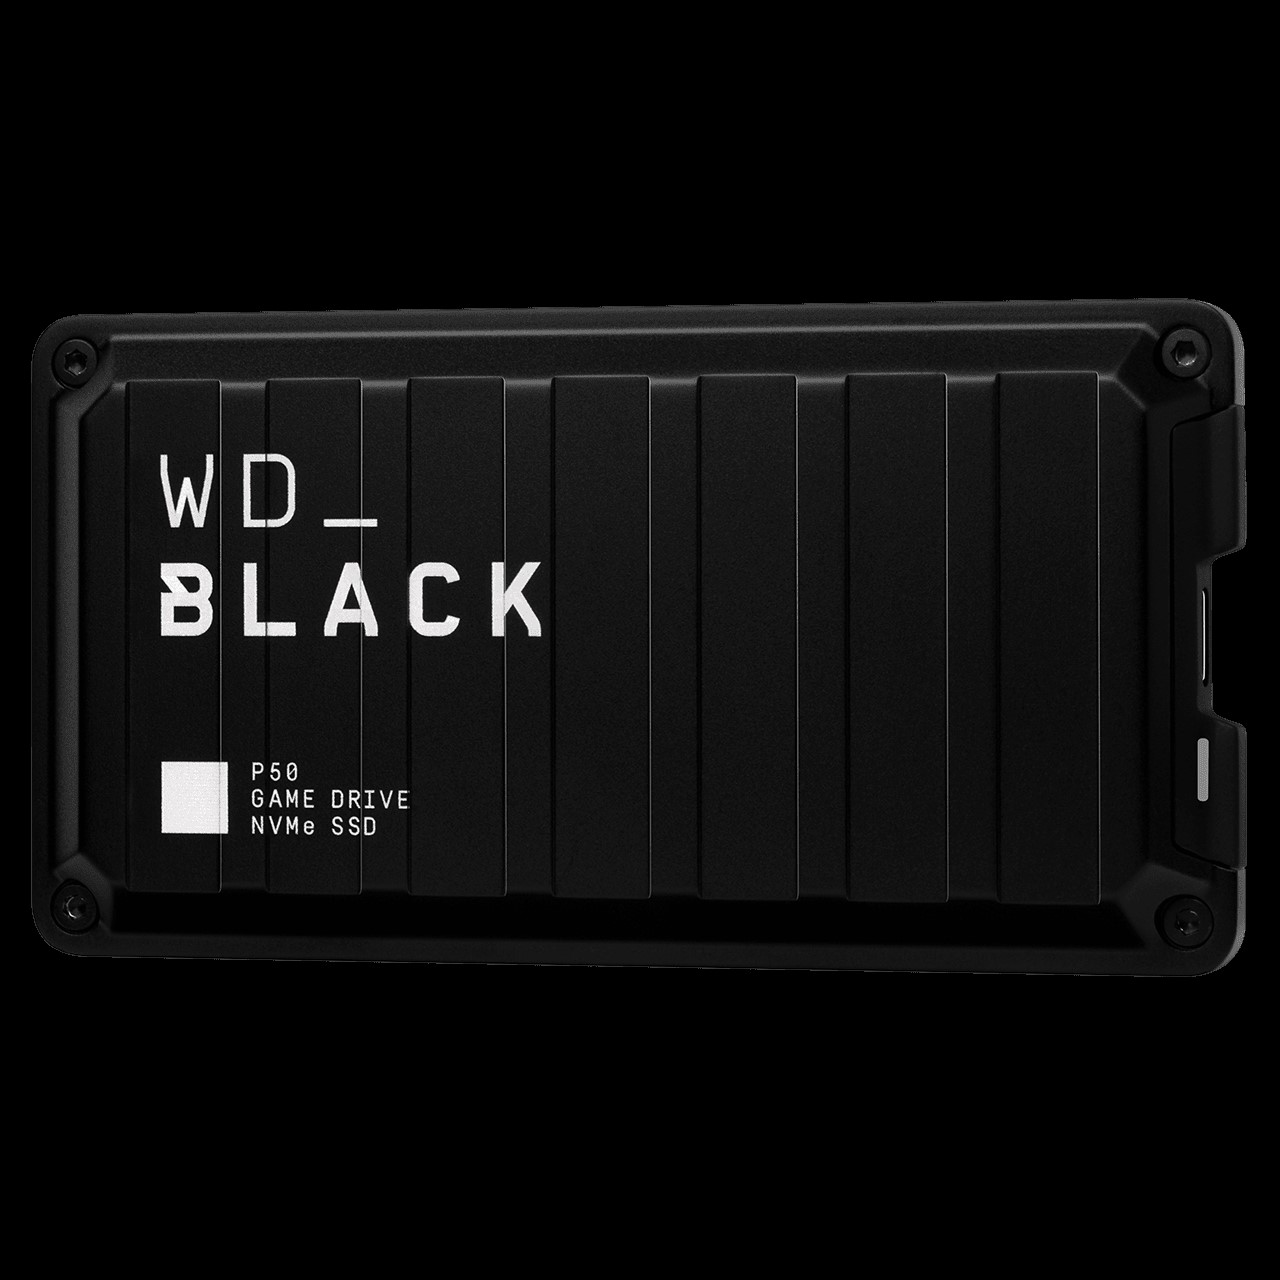 WD _BLACK P50 Game Drive SSD